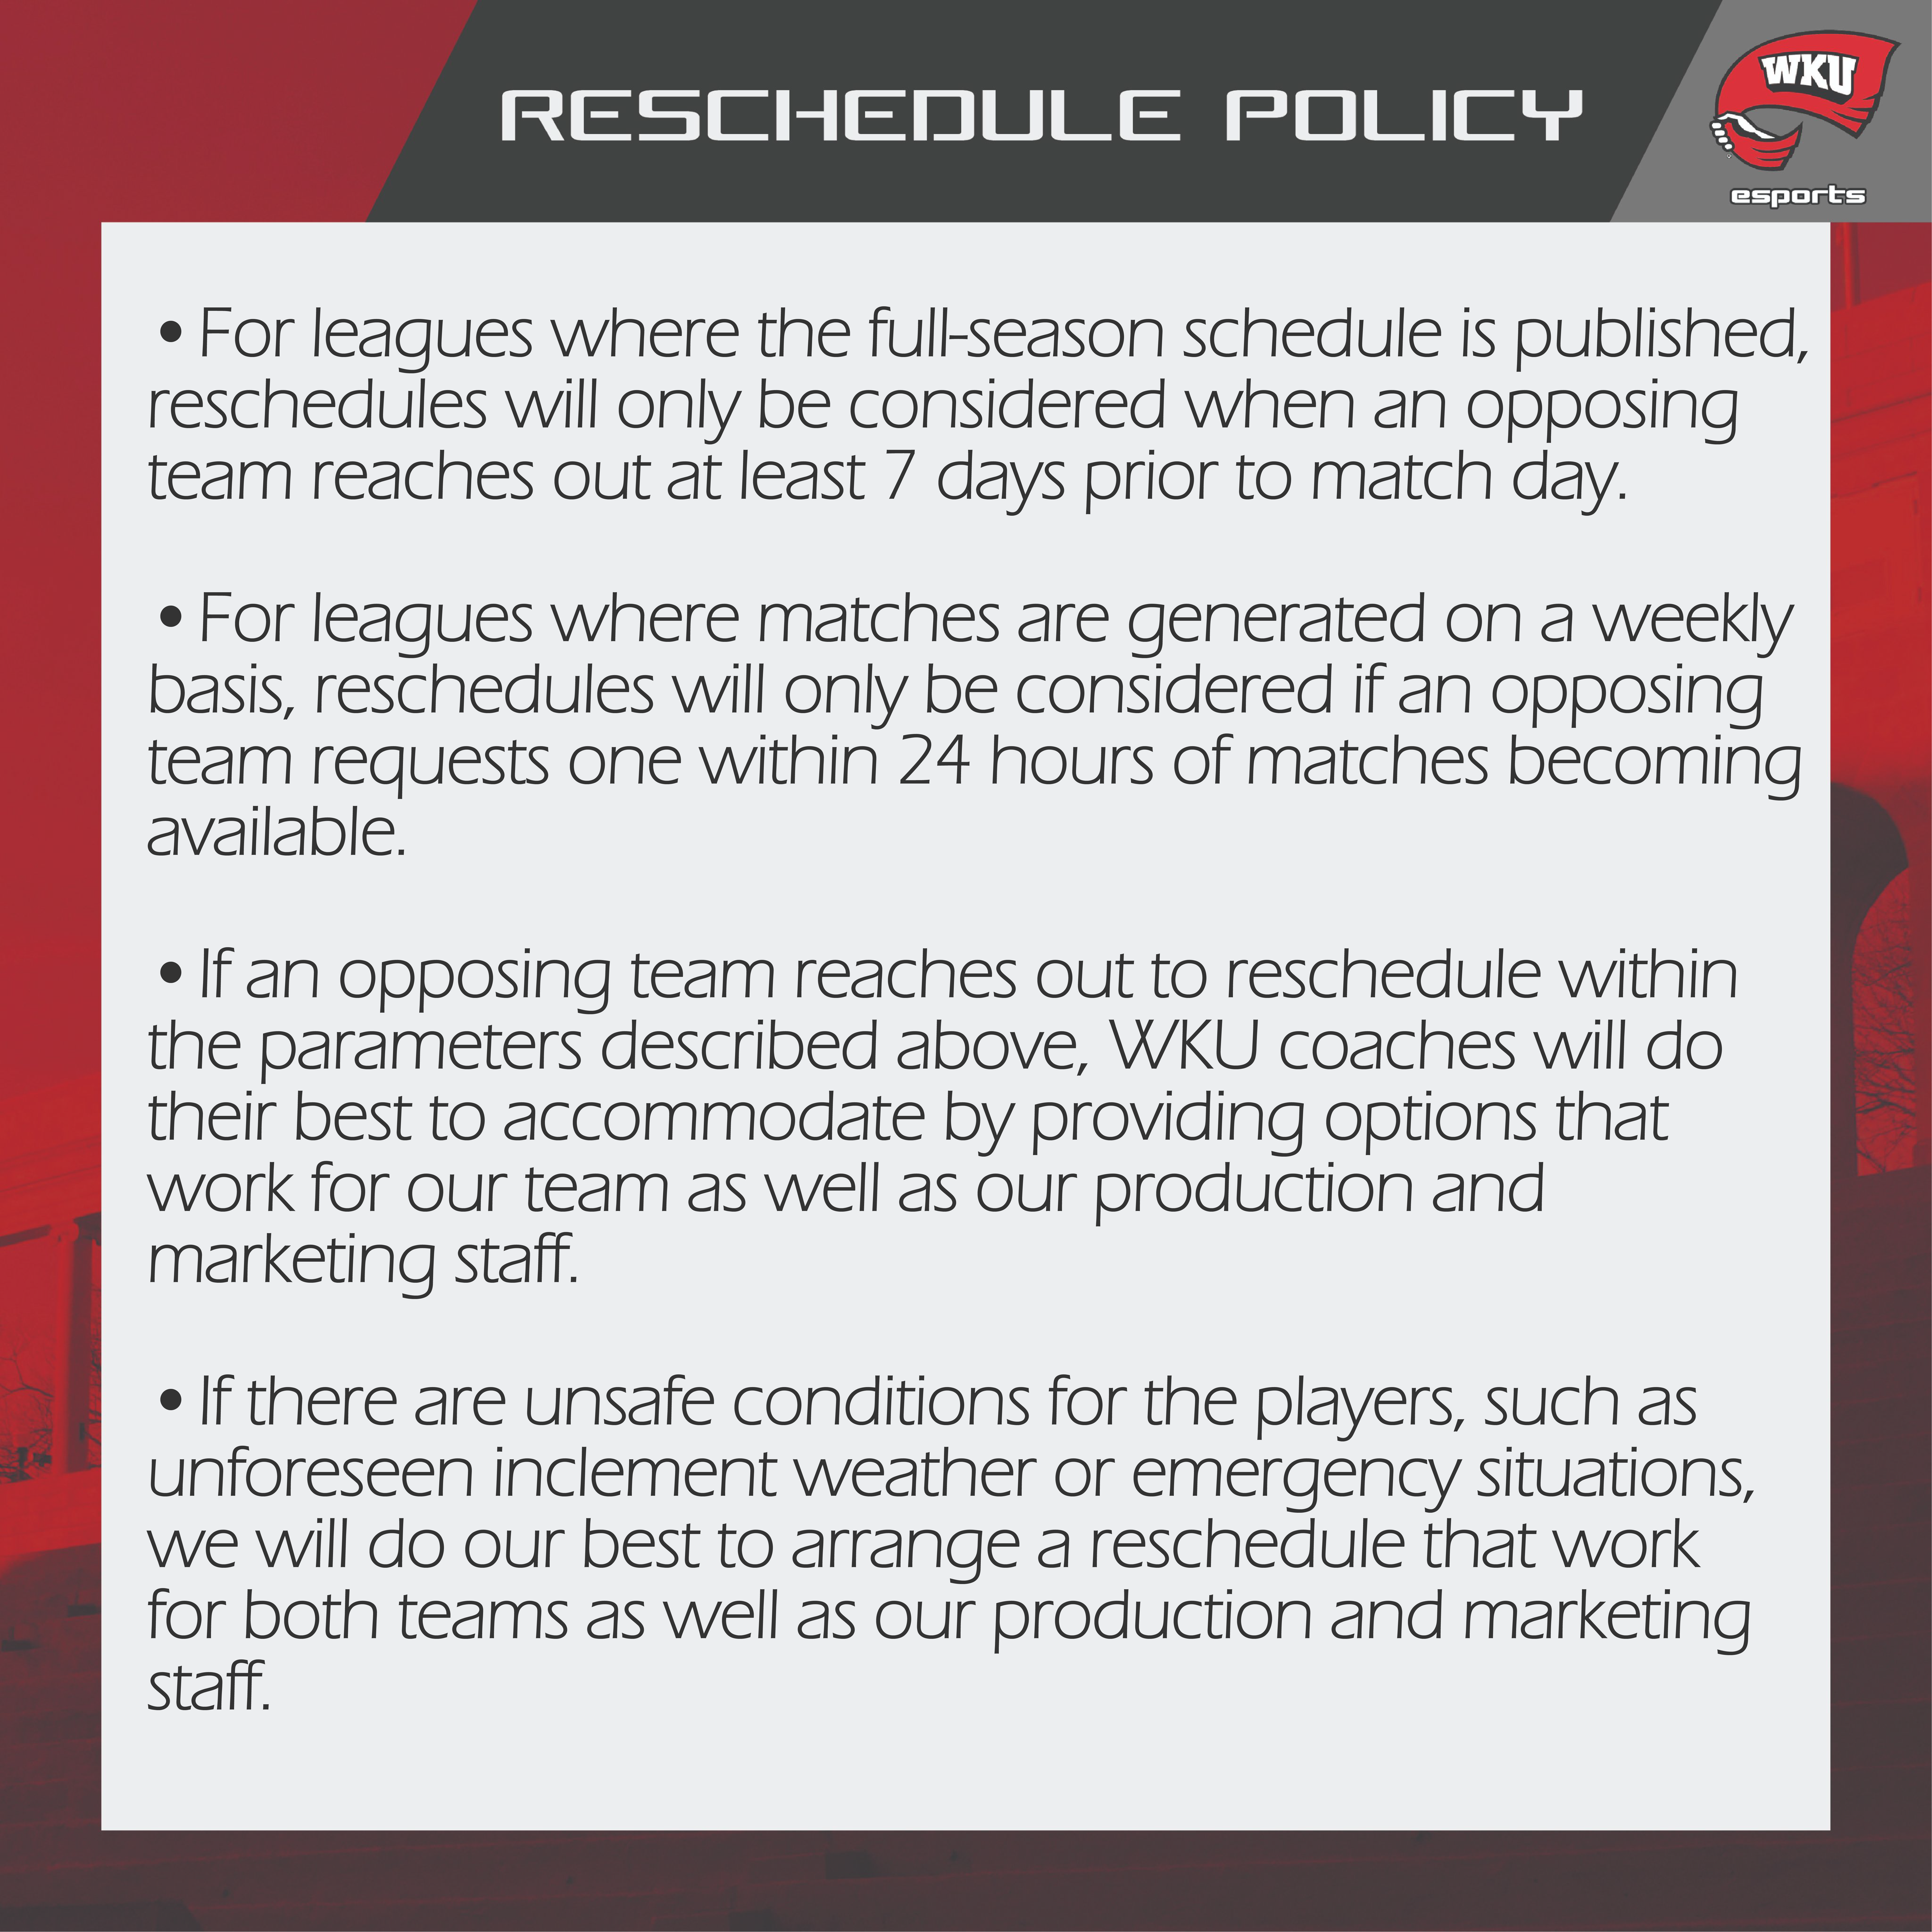 WKU Esports Program reschedule policy